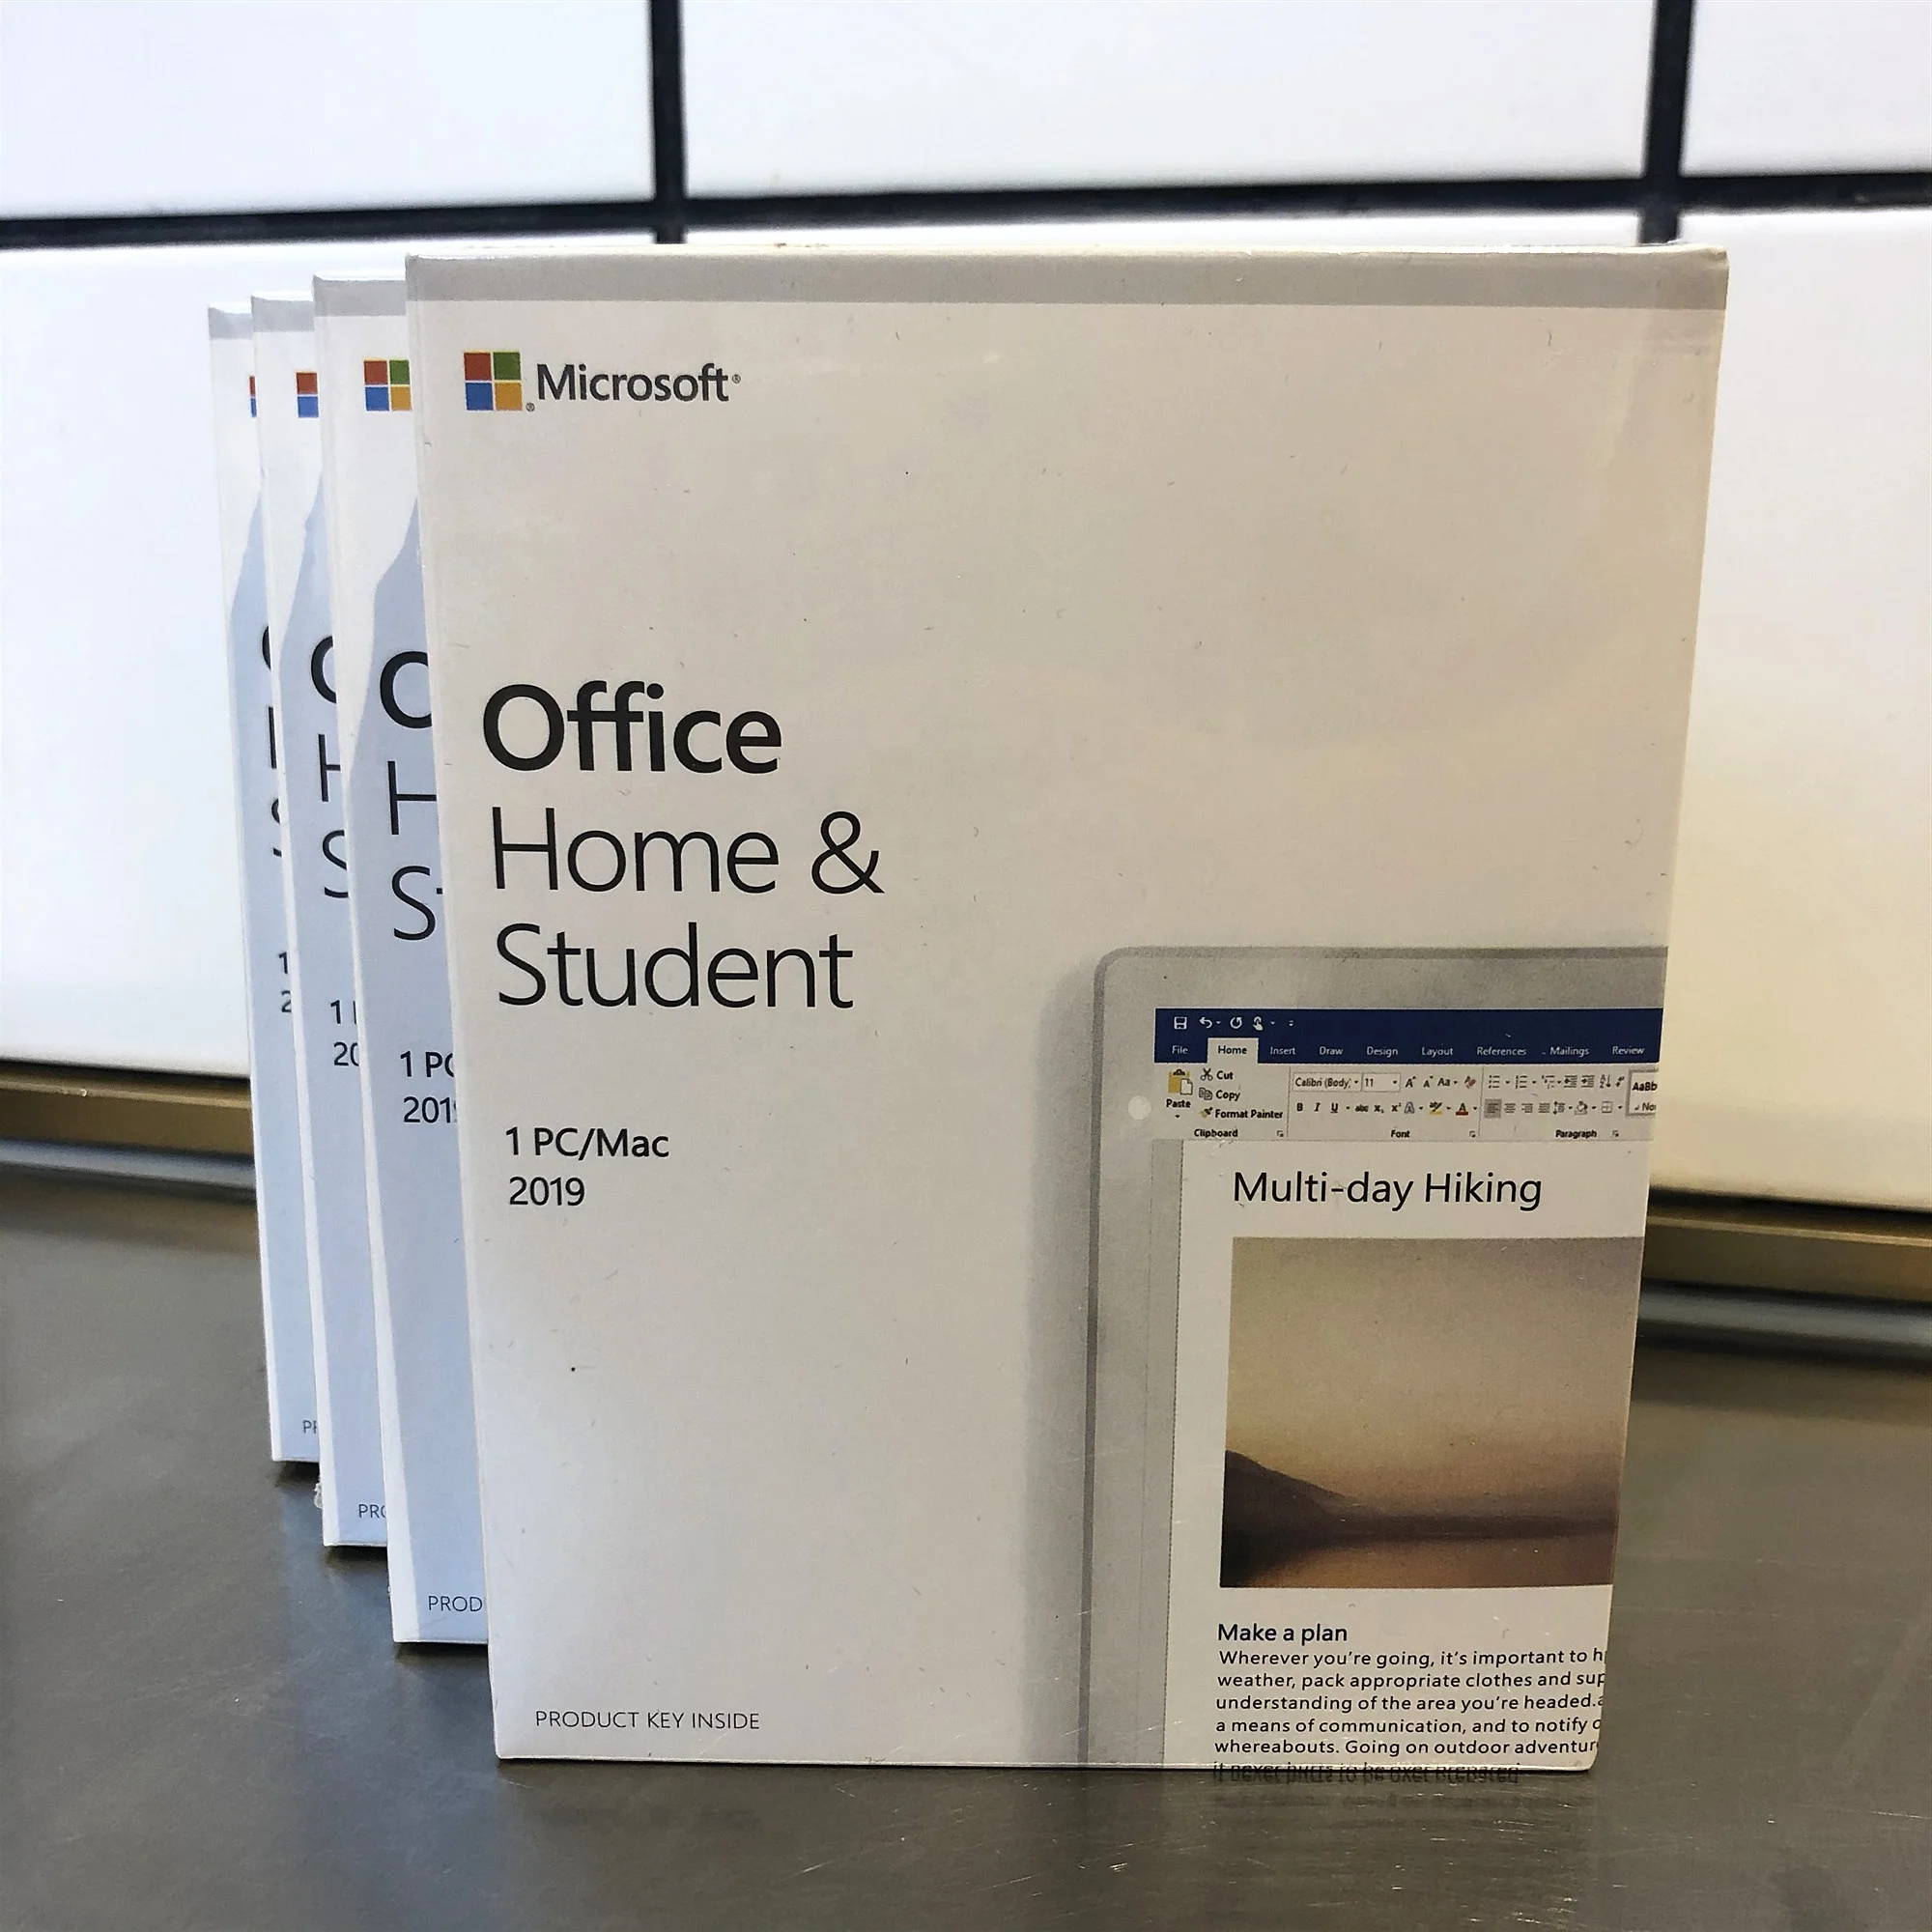 office 2019 for mac buy